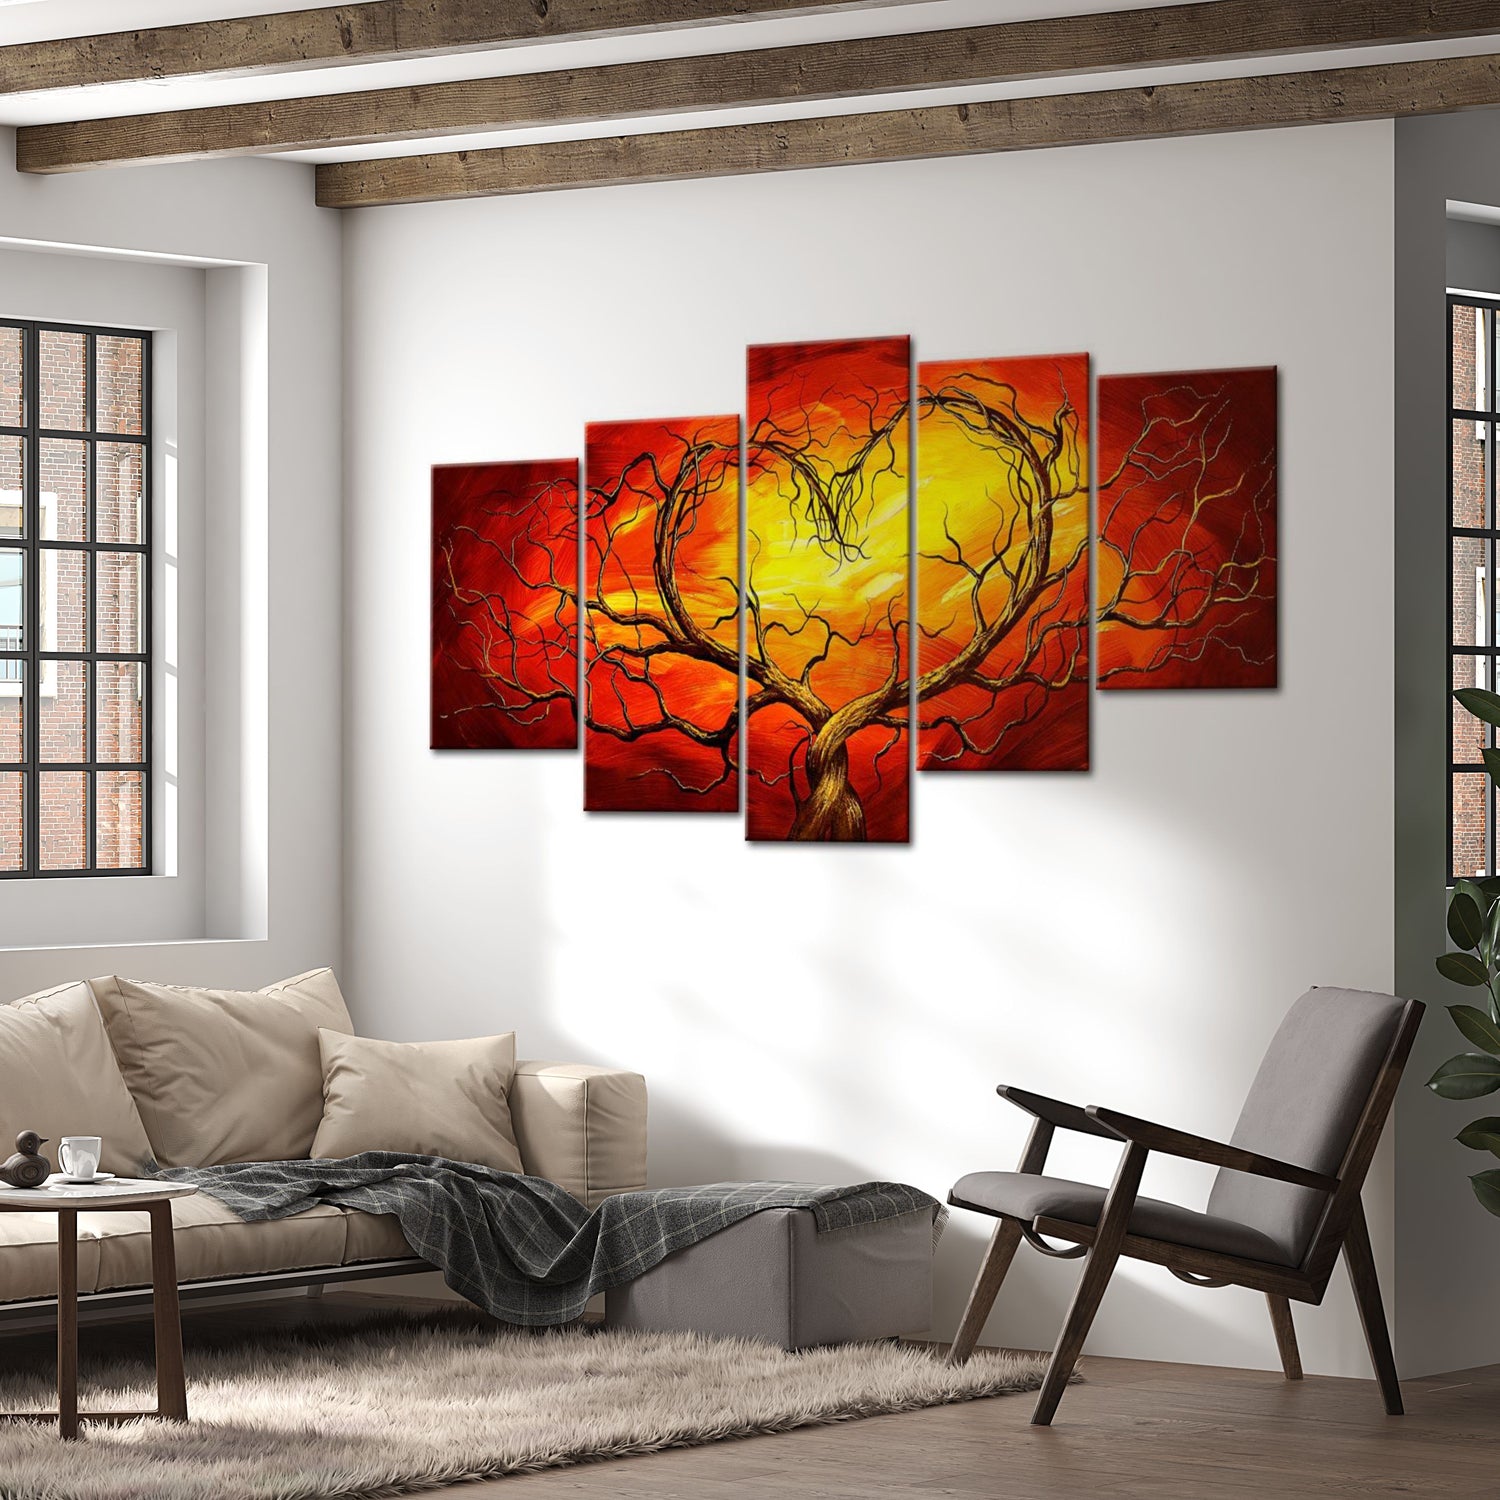 Abstract Canvas Wall Art - Burning Heart